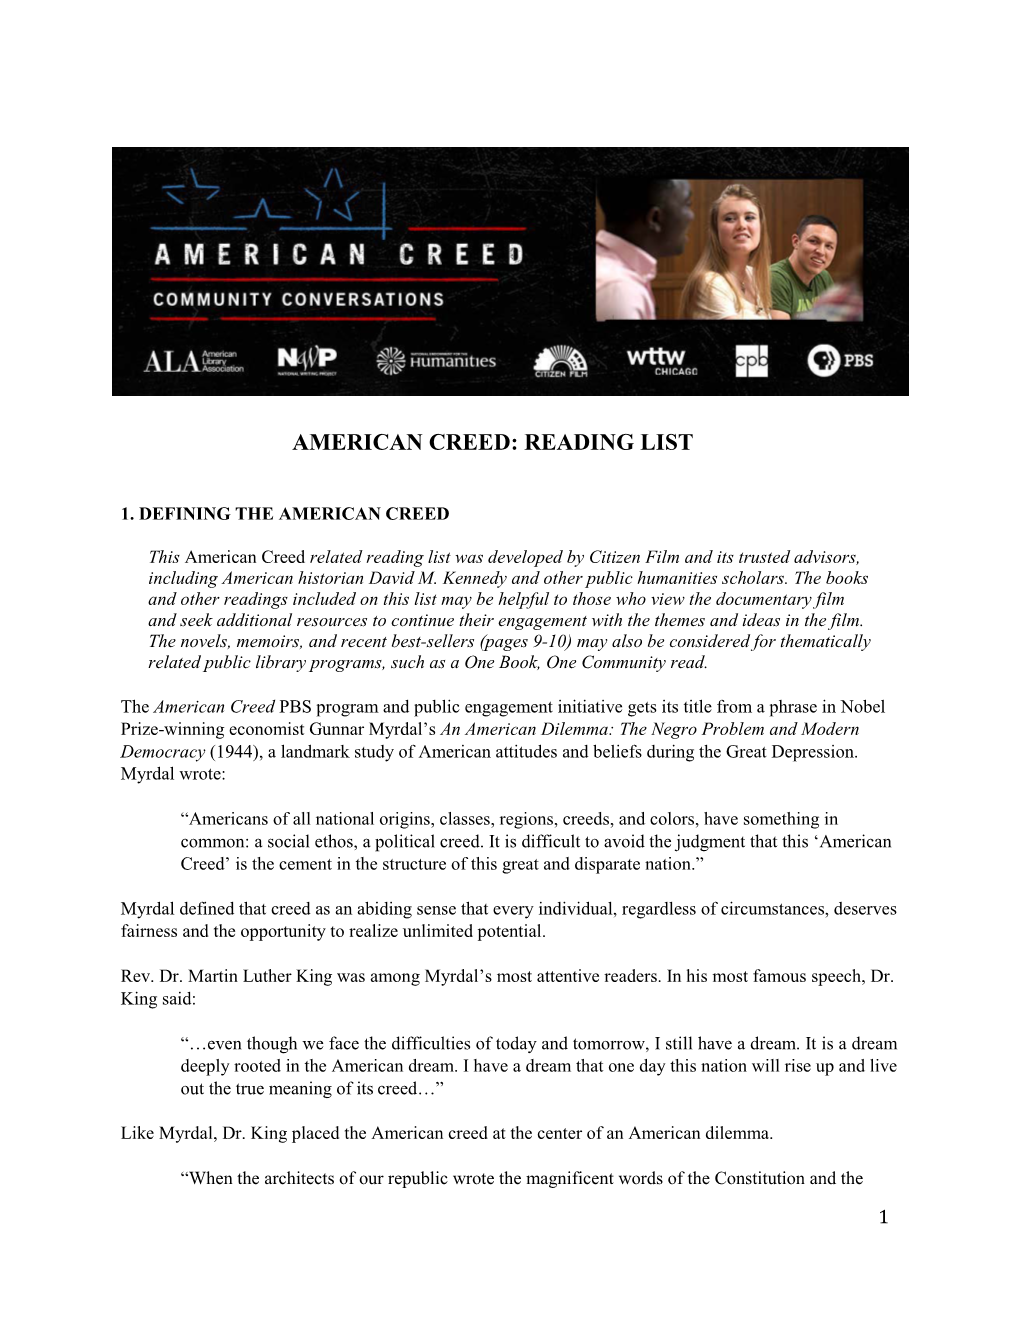 American Creed: Reading List